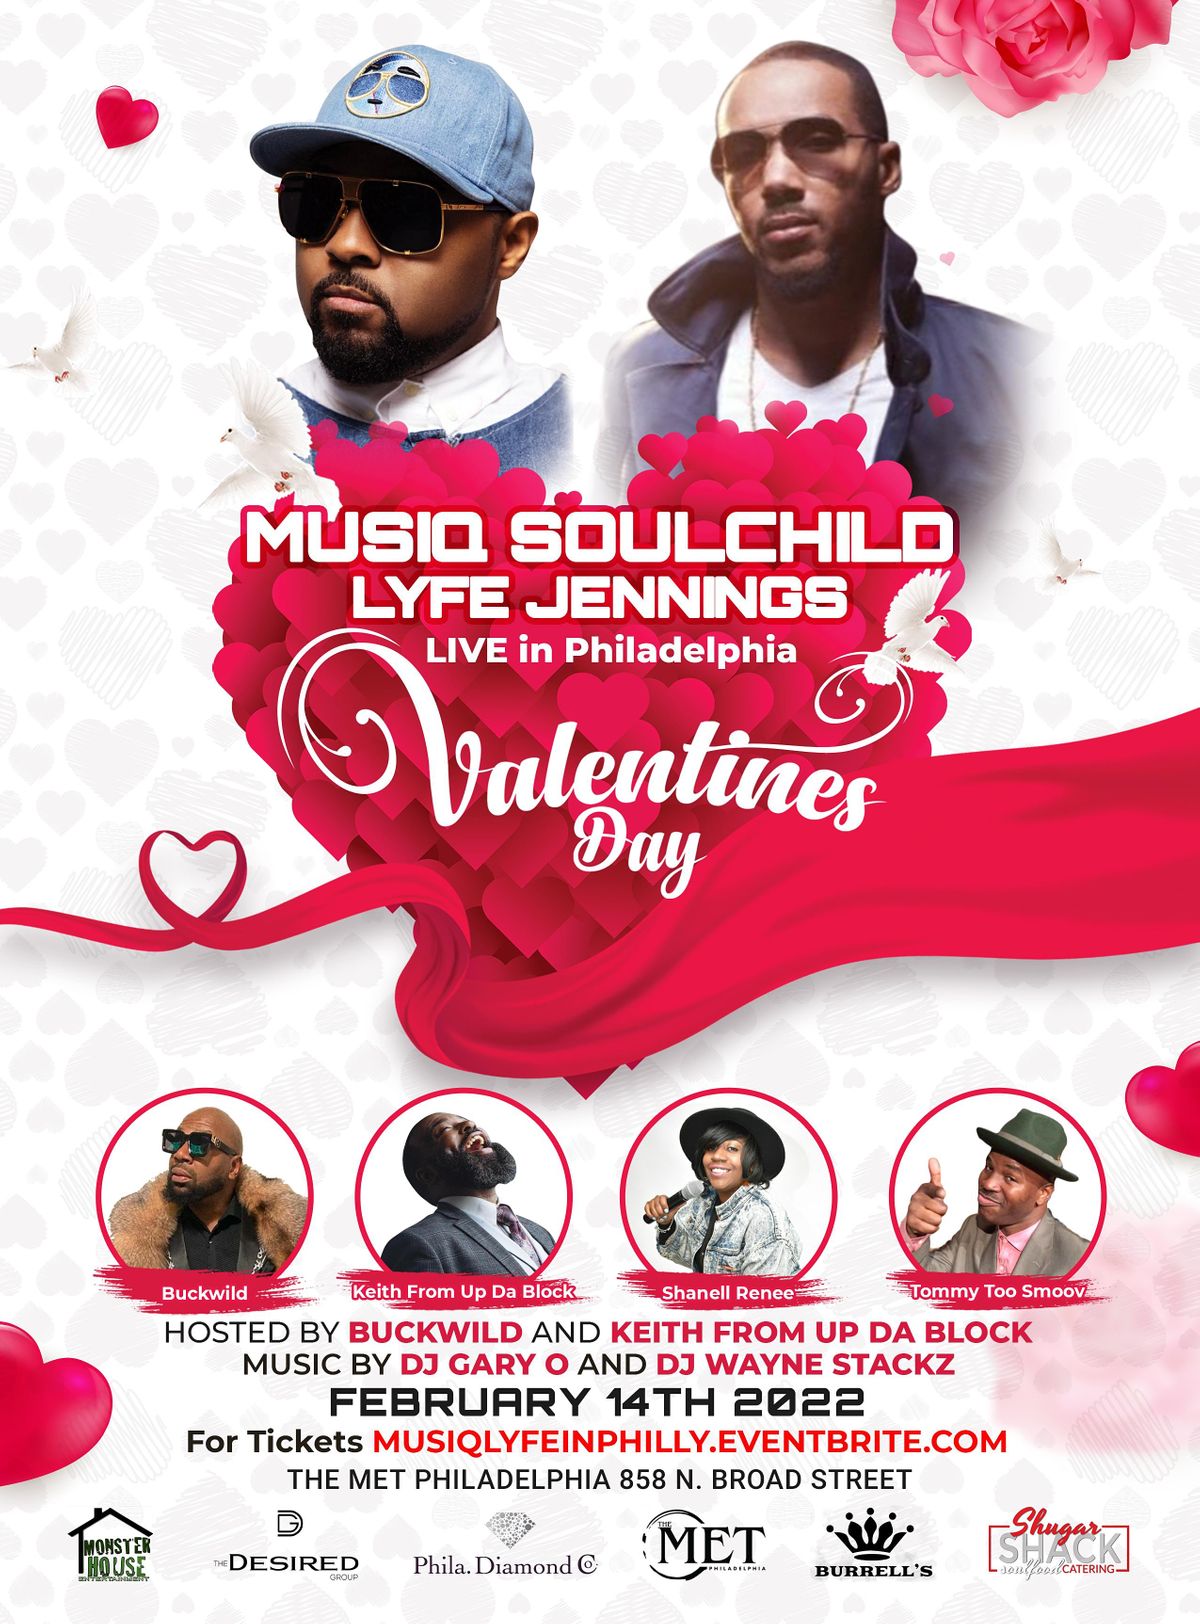 Musiq Soulchild, Lyfe Jennings "LIVE" on Valentines Day